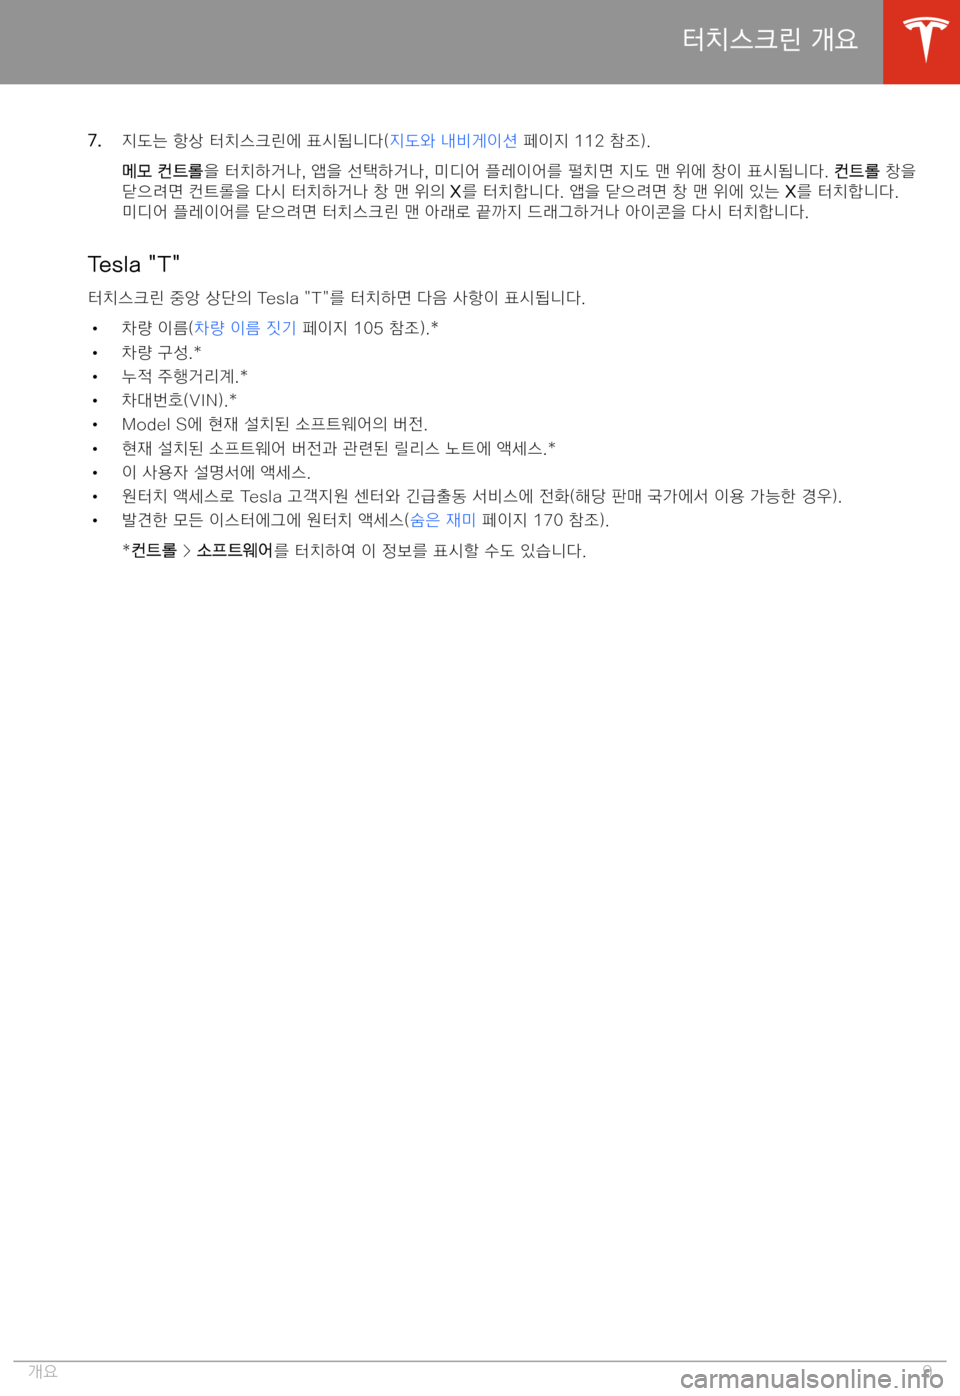 TESLA MODEL S 2020  사용자 가이드 (in Korean) �7�.?